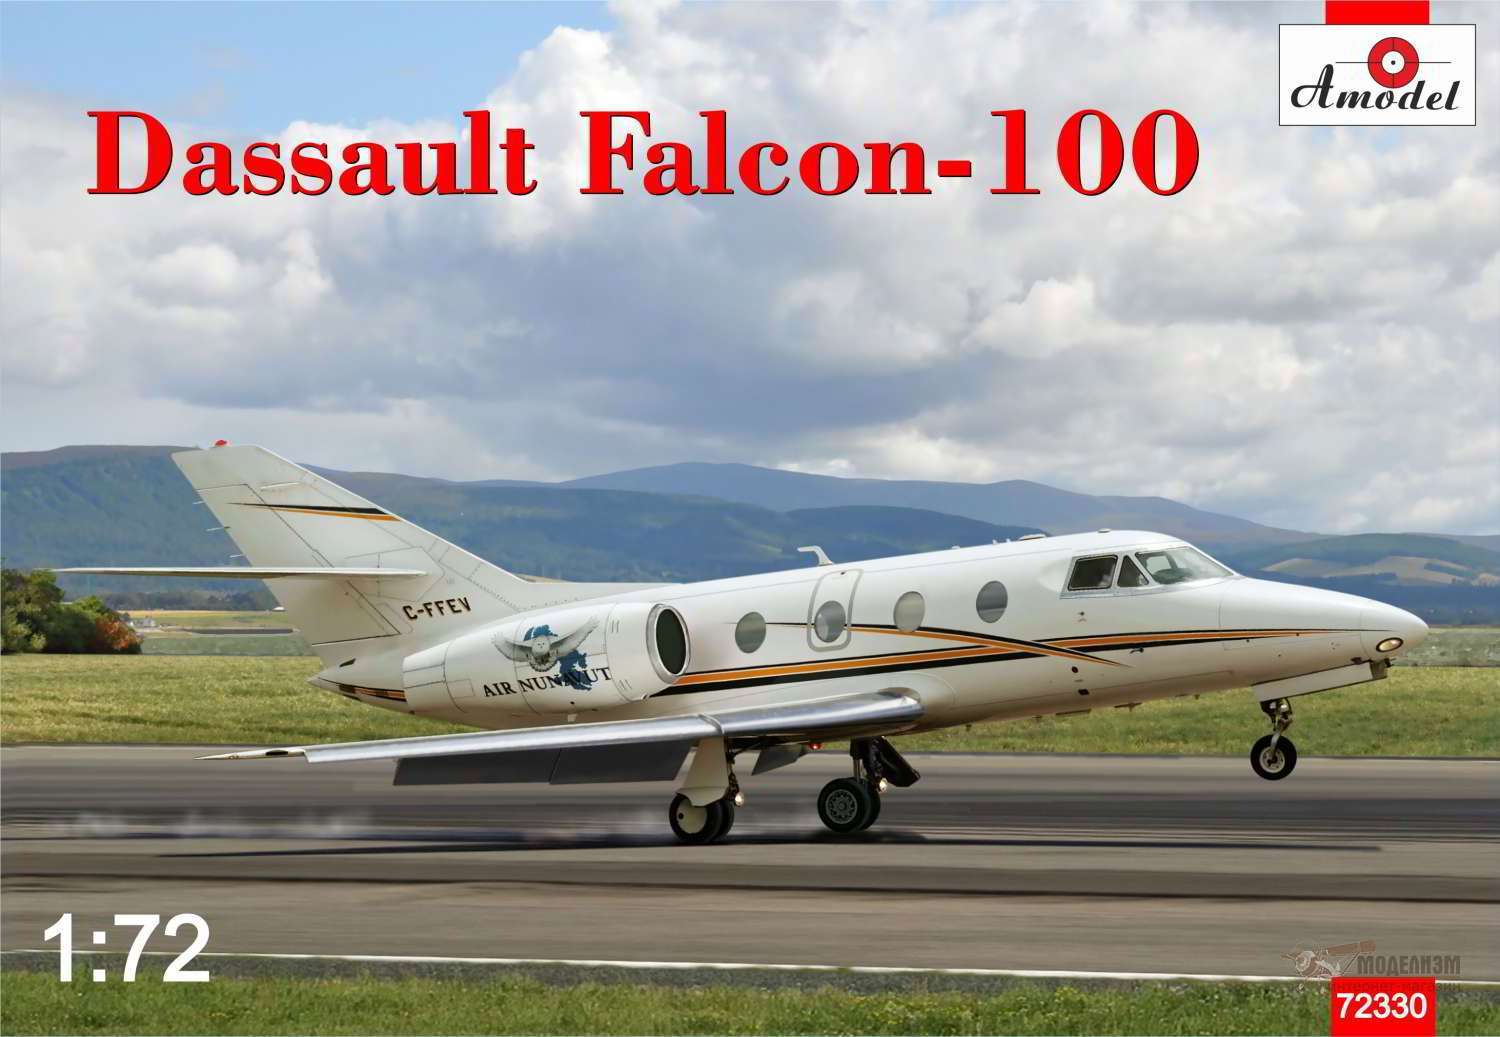 Dassault Falcon-100 Amodel. Картинка №1